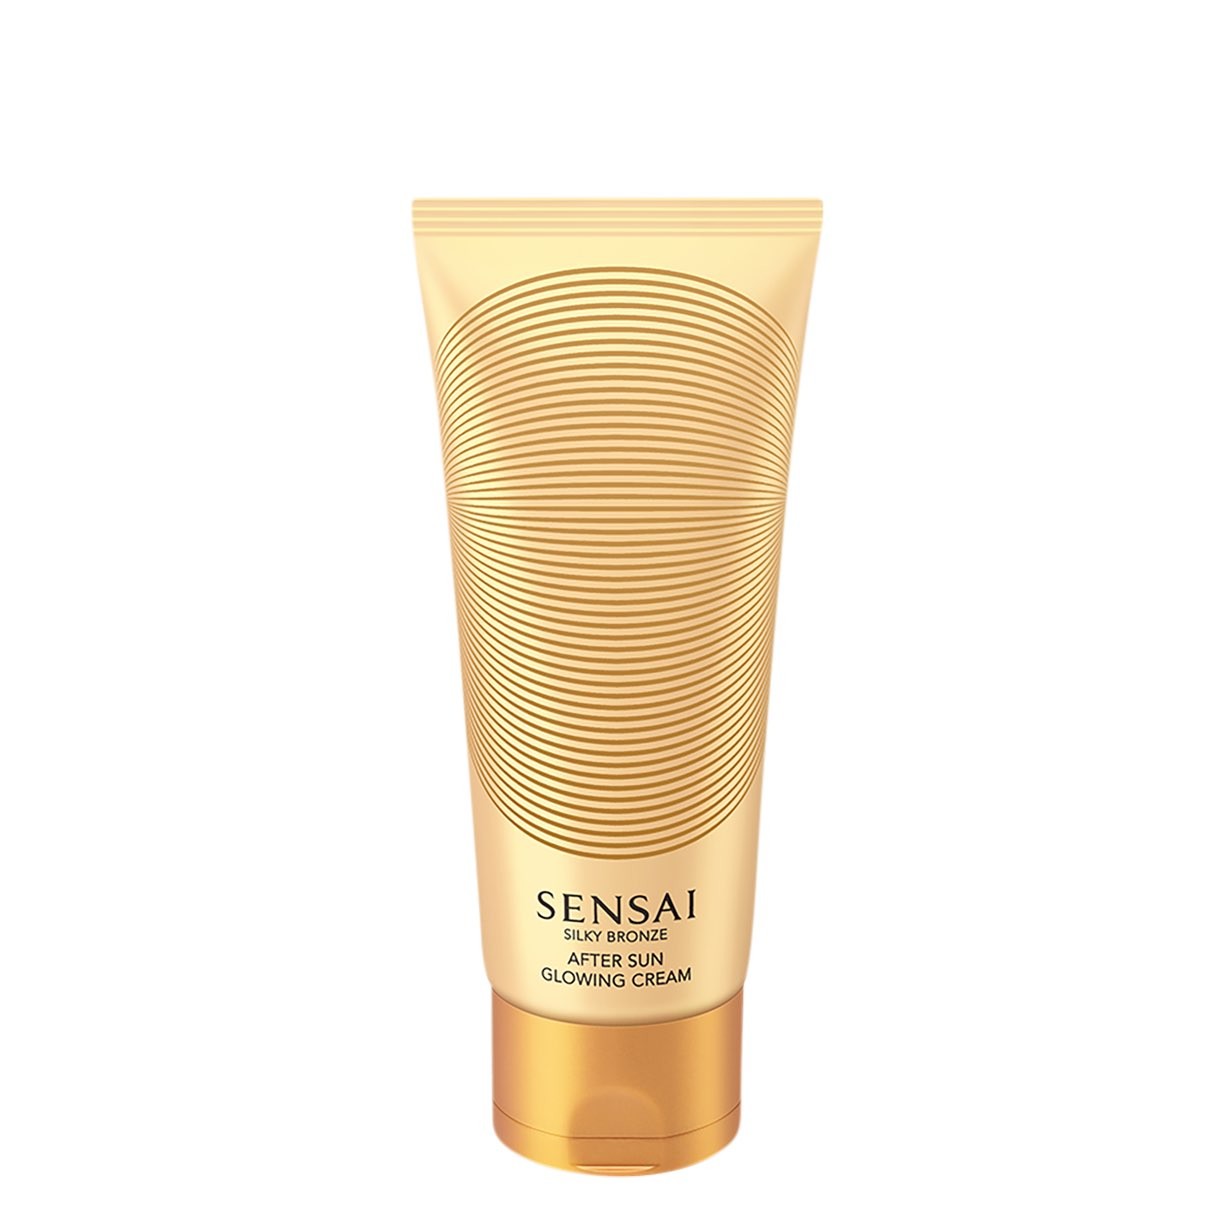 SENSAI - After Sun Glowing Cream - 